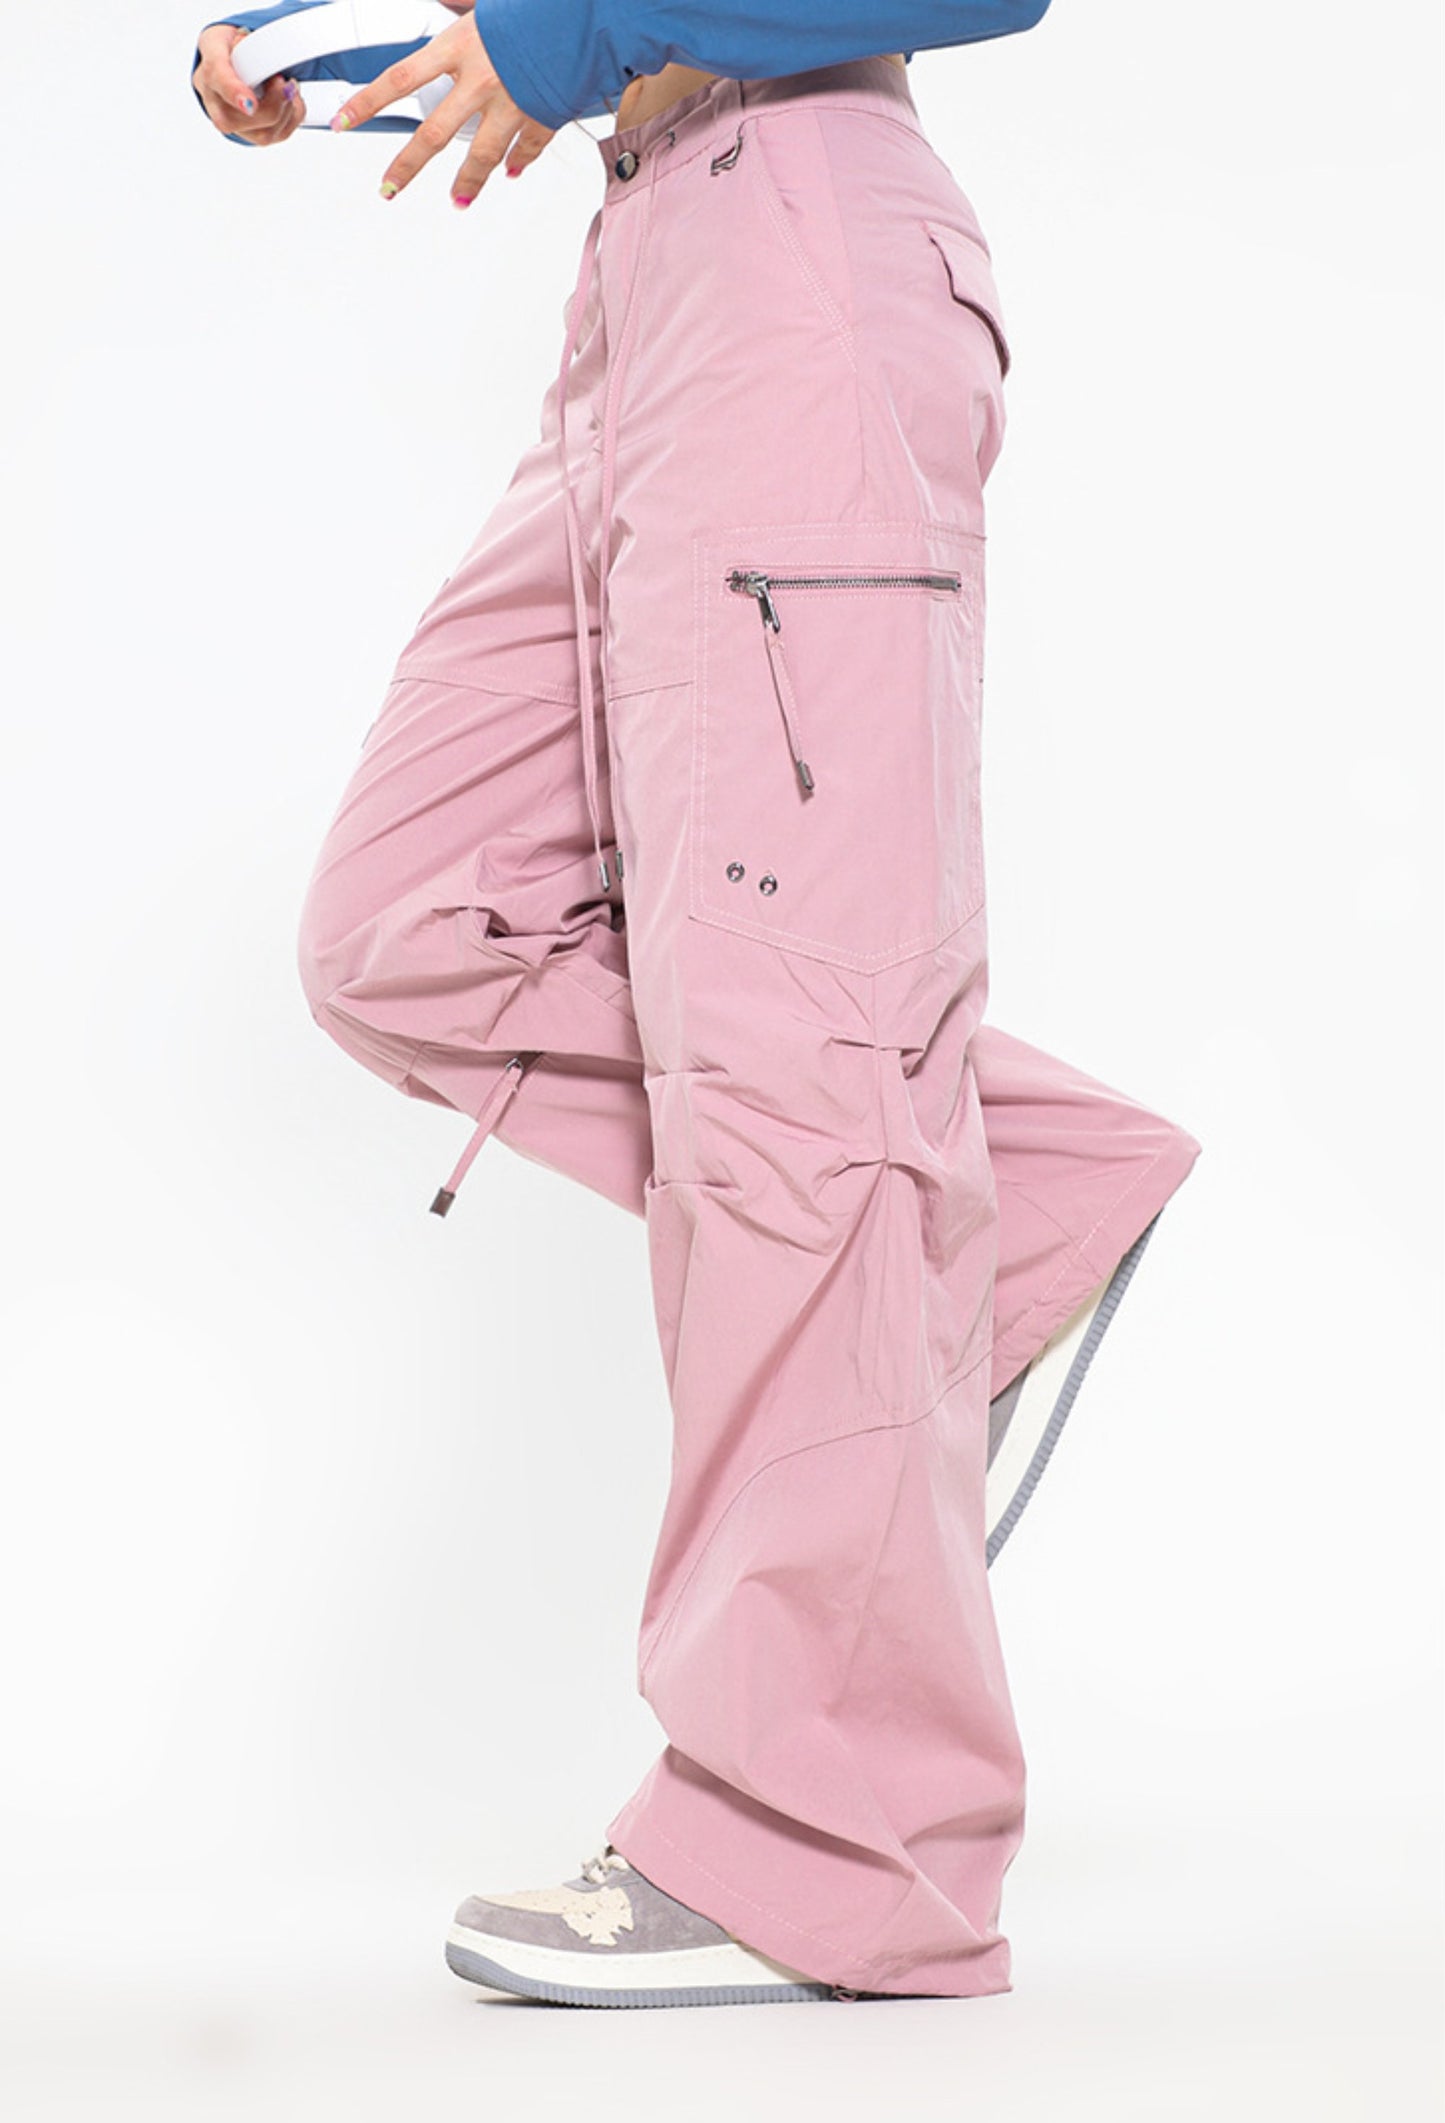 Unisex 2 Colors Black and Pink Mid Waist Big Pocket Cargo Pants